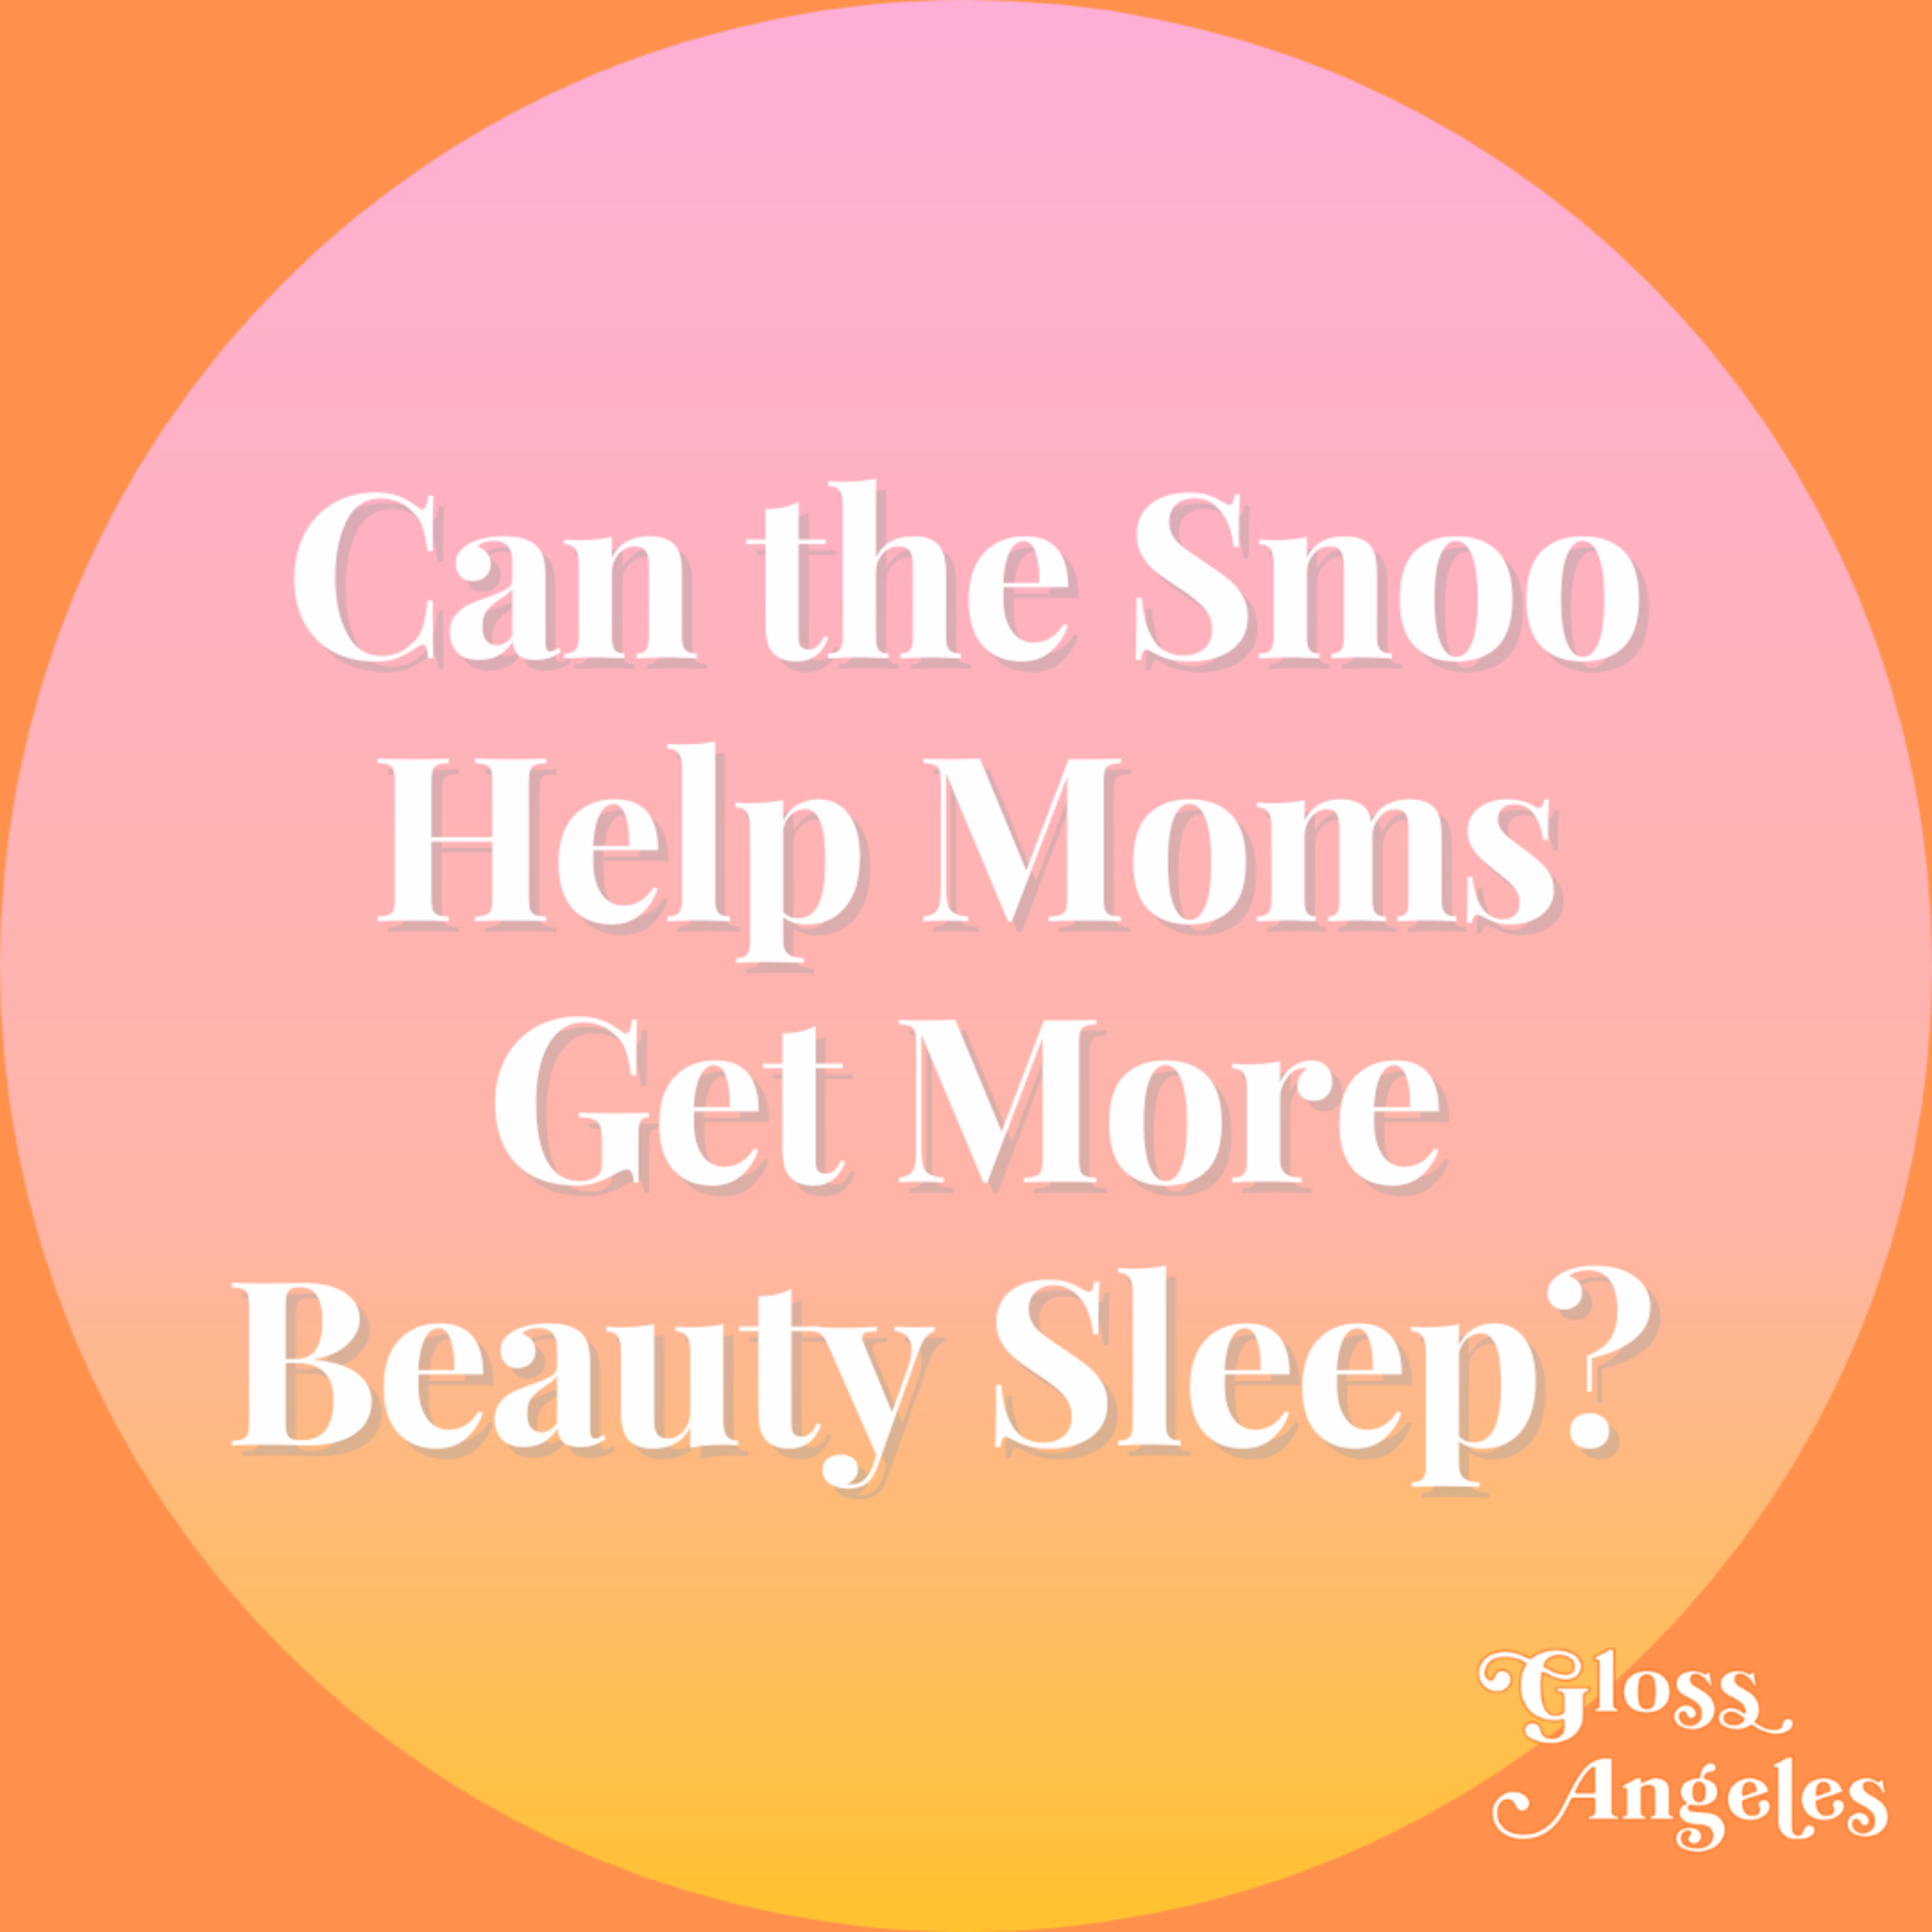 Can the Snoo Help Moms Get More Beauty Sleep?